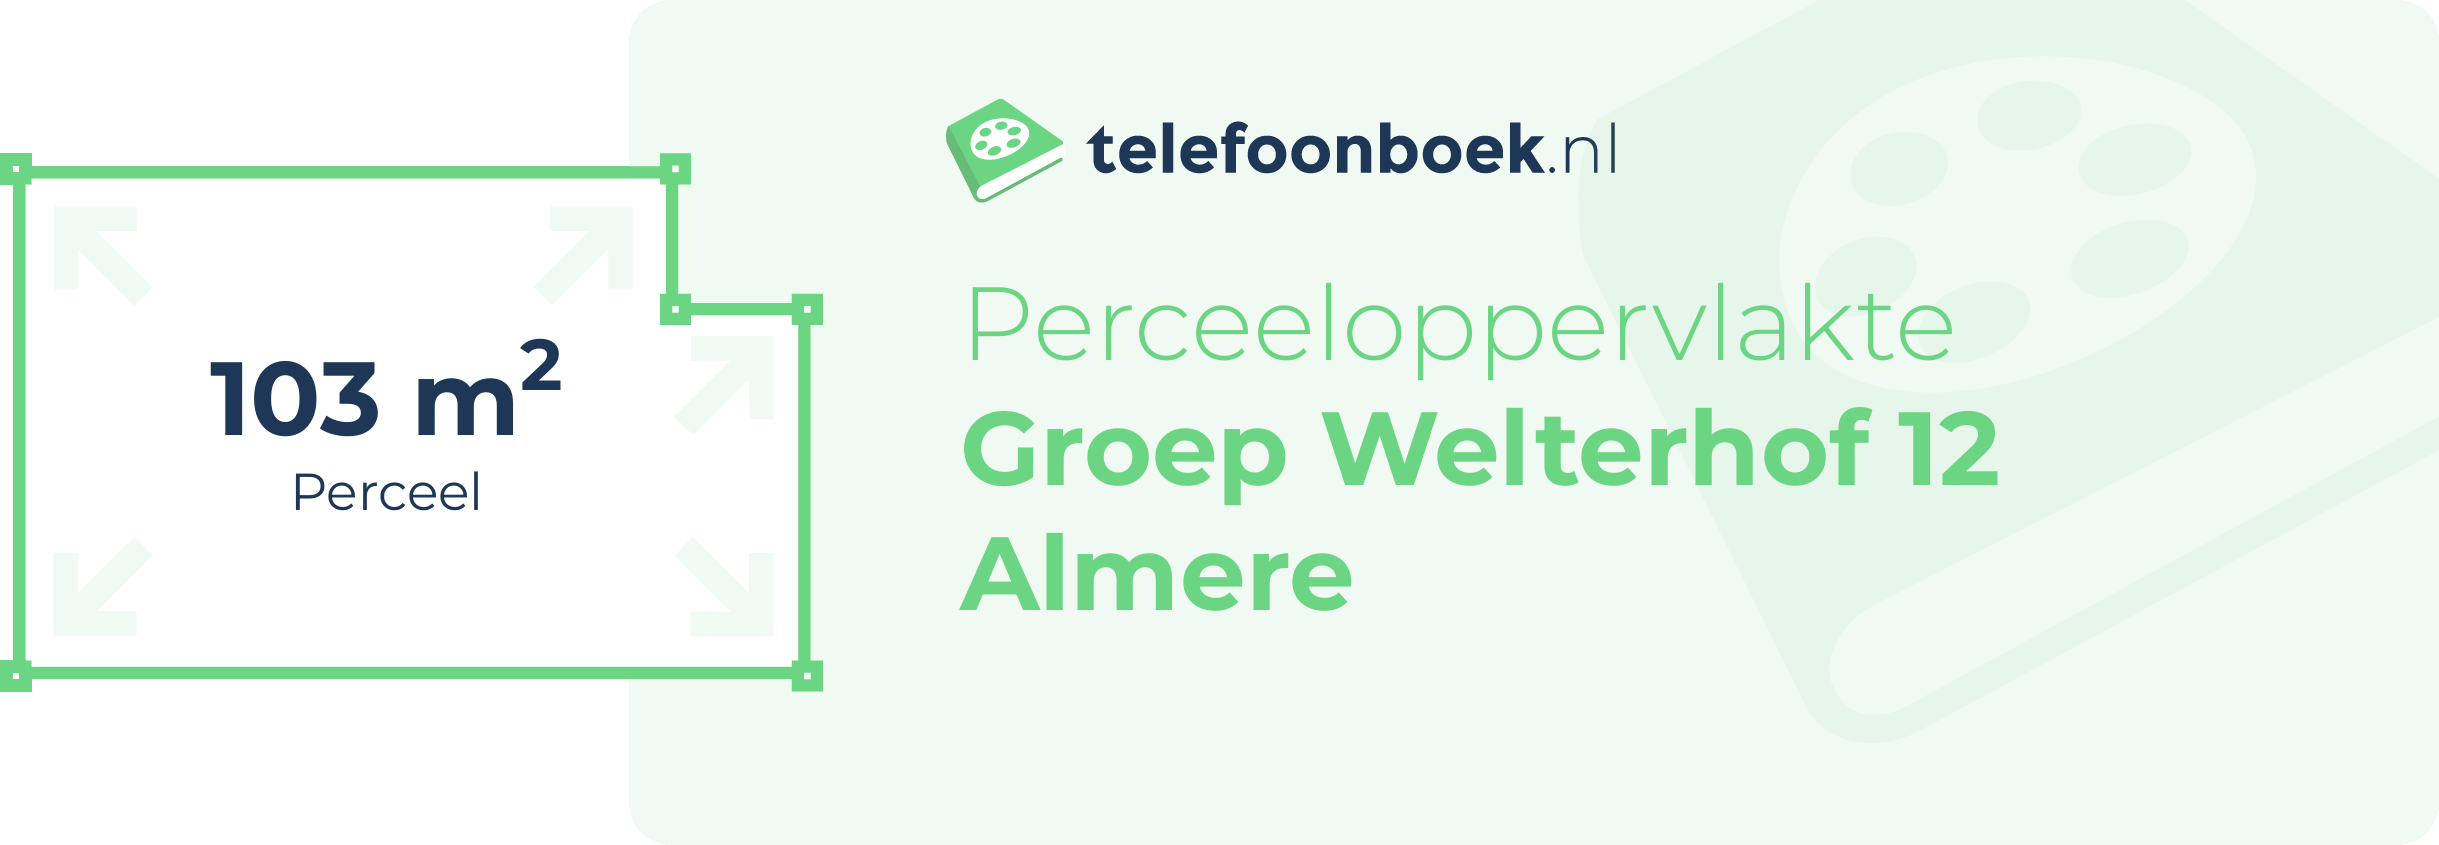 Perceeloppervlakte Groep Welterhof 12 Almere